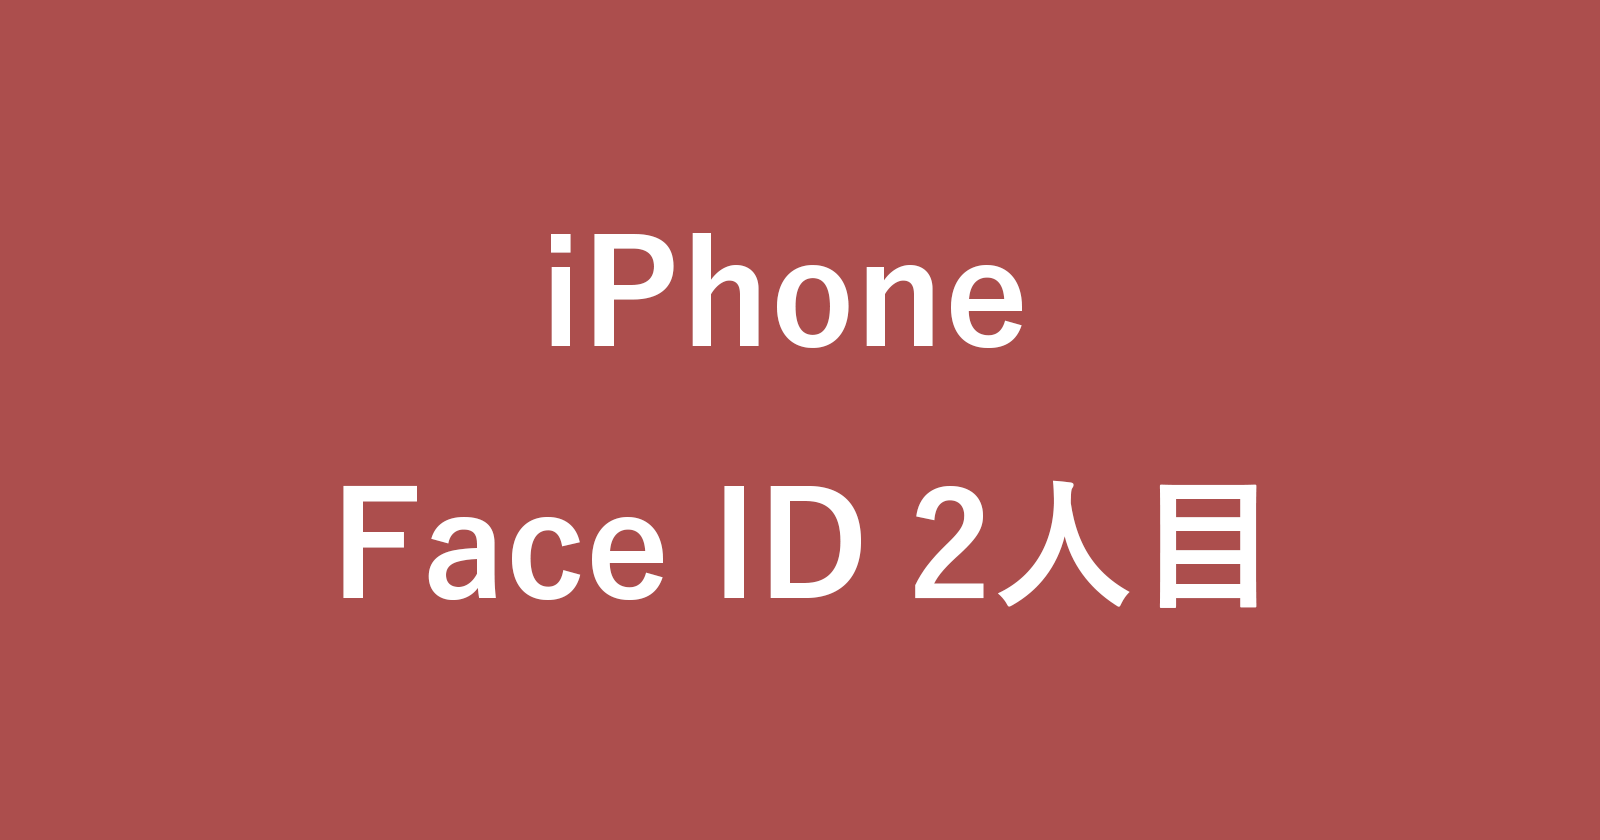 iphone alternate face id